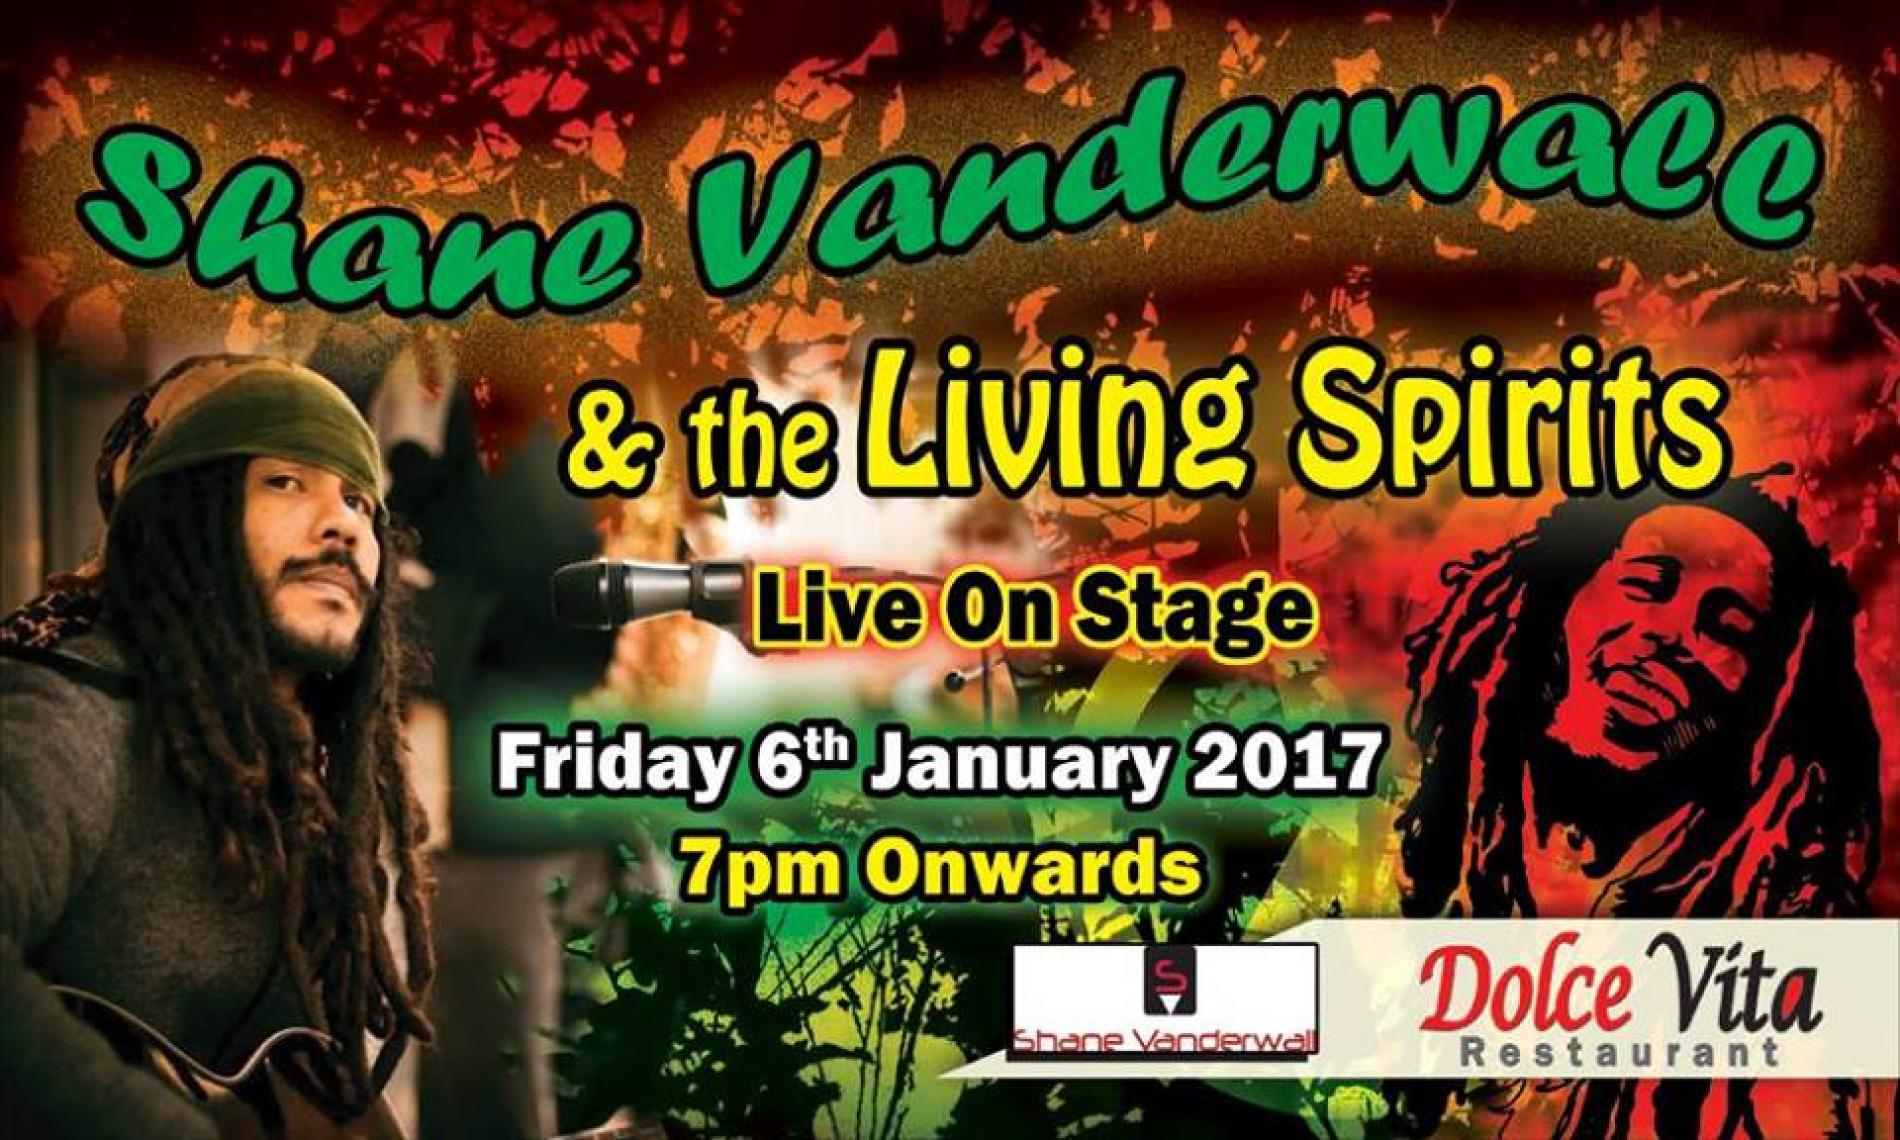 Shane Vanderwall & The Living Spirits